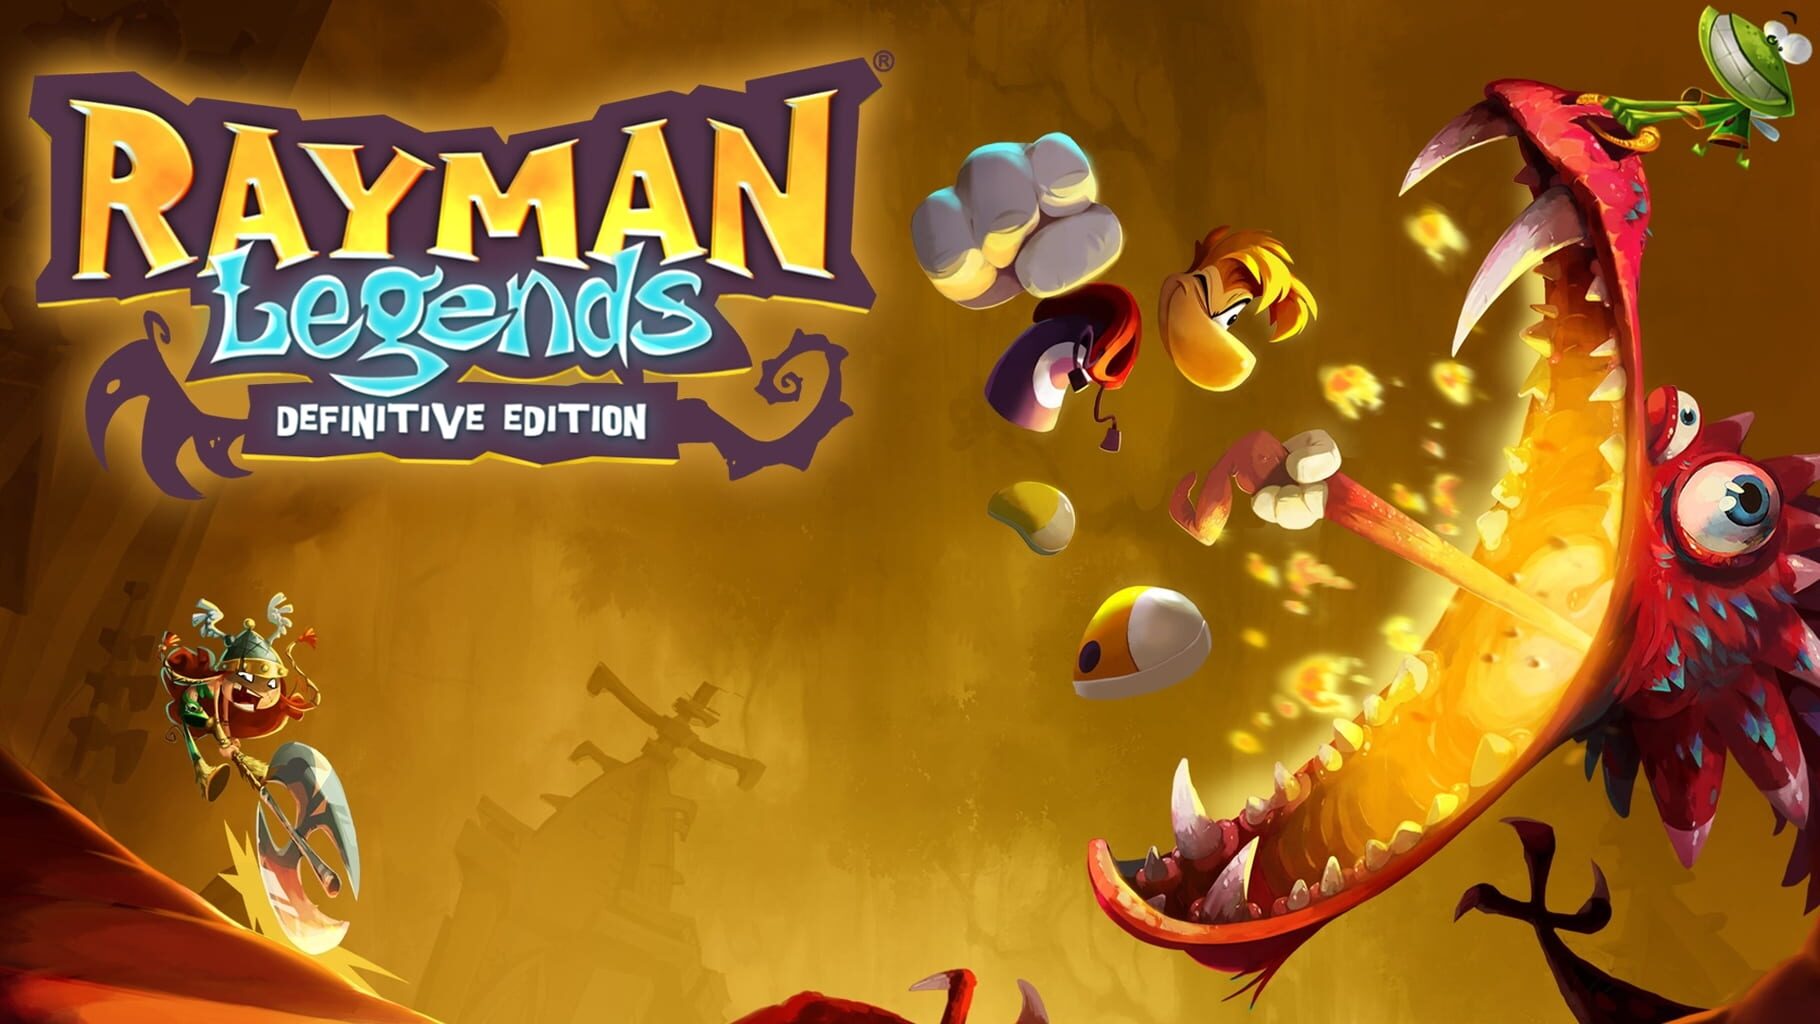 Arte - Rayman Legends: Definitive Edition